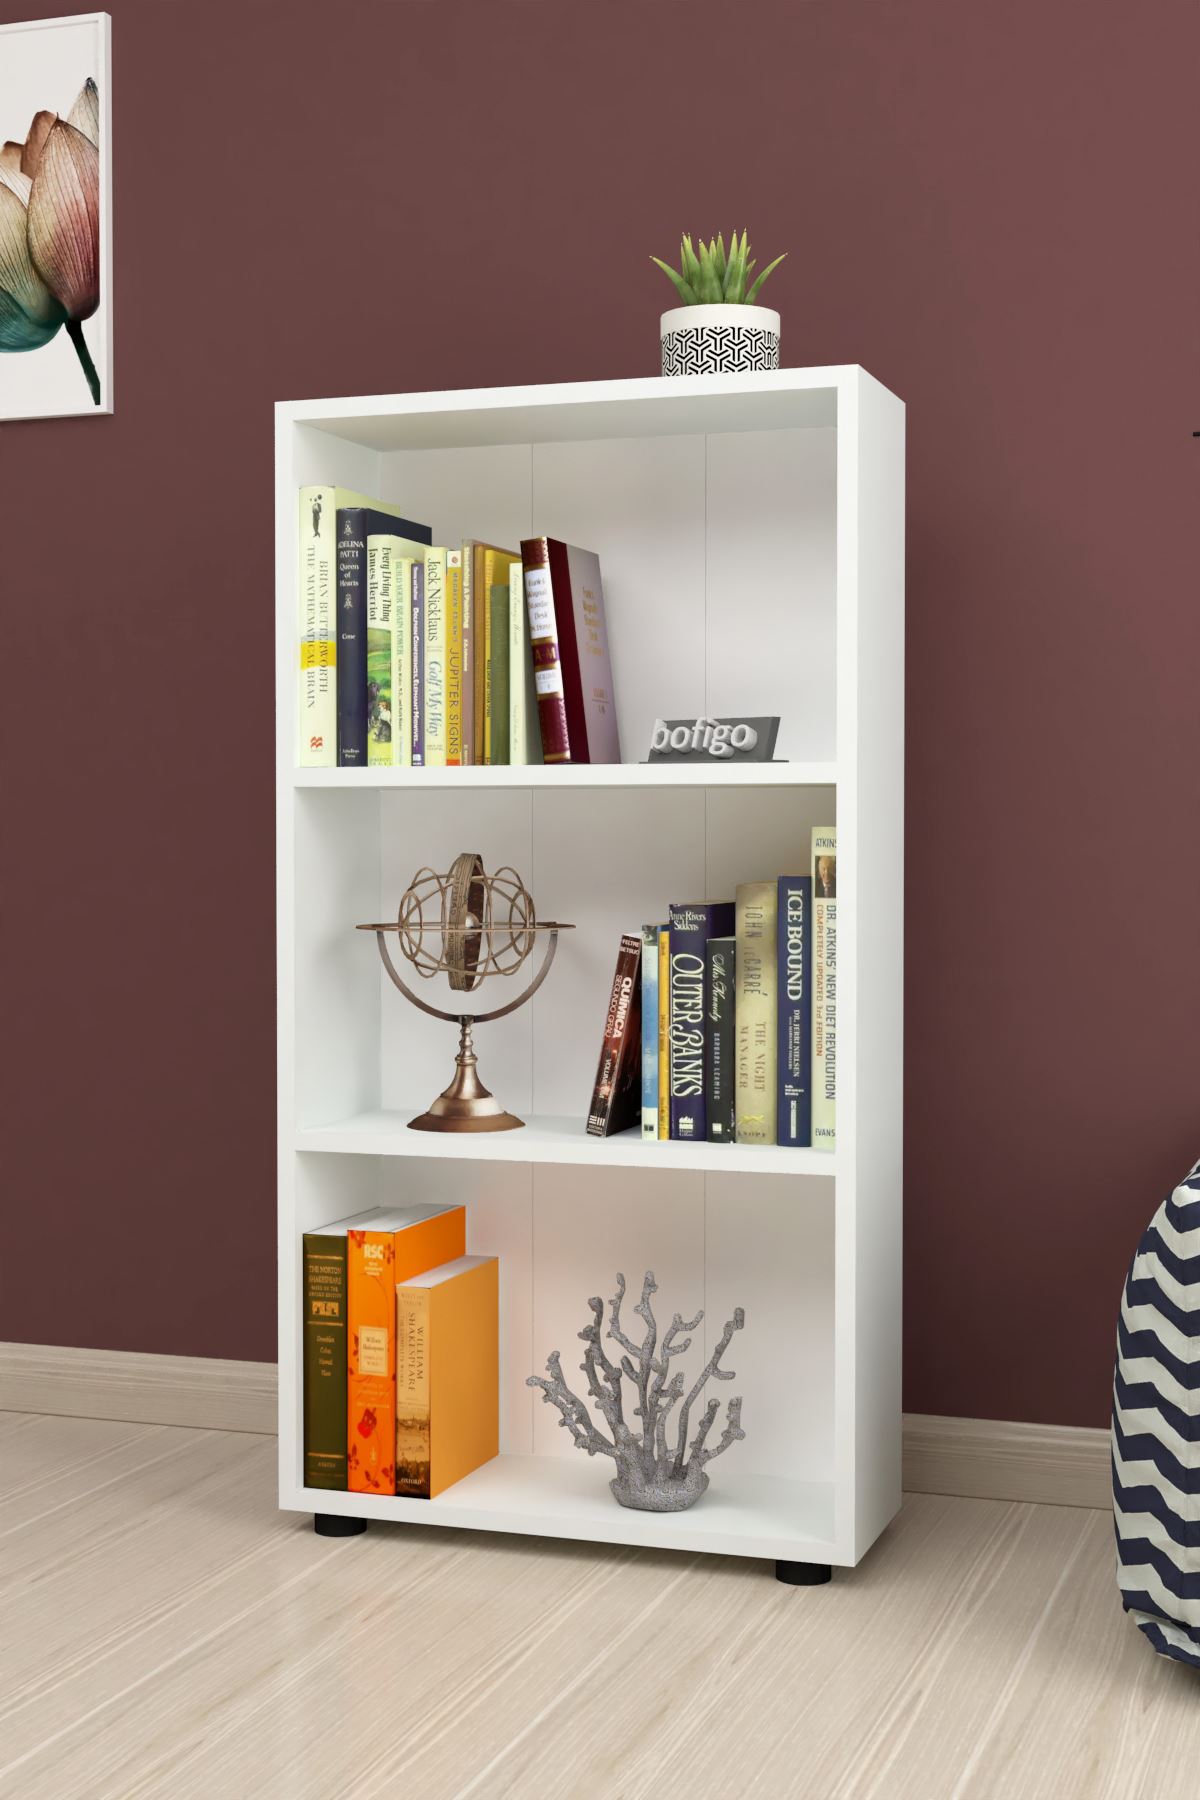 Bofigo Decorative 3 Shelves Bookcase White